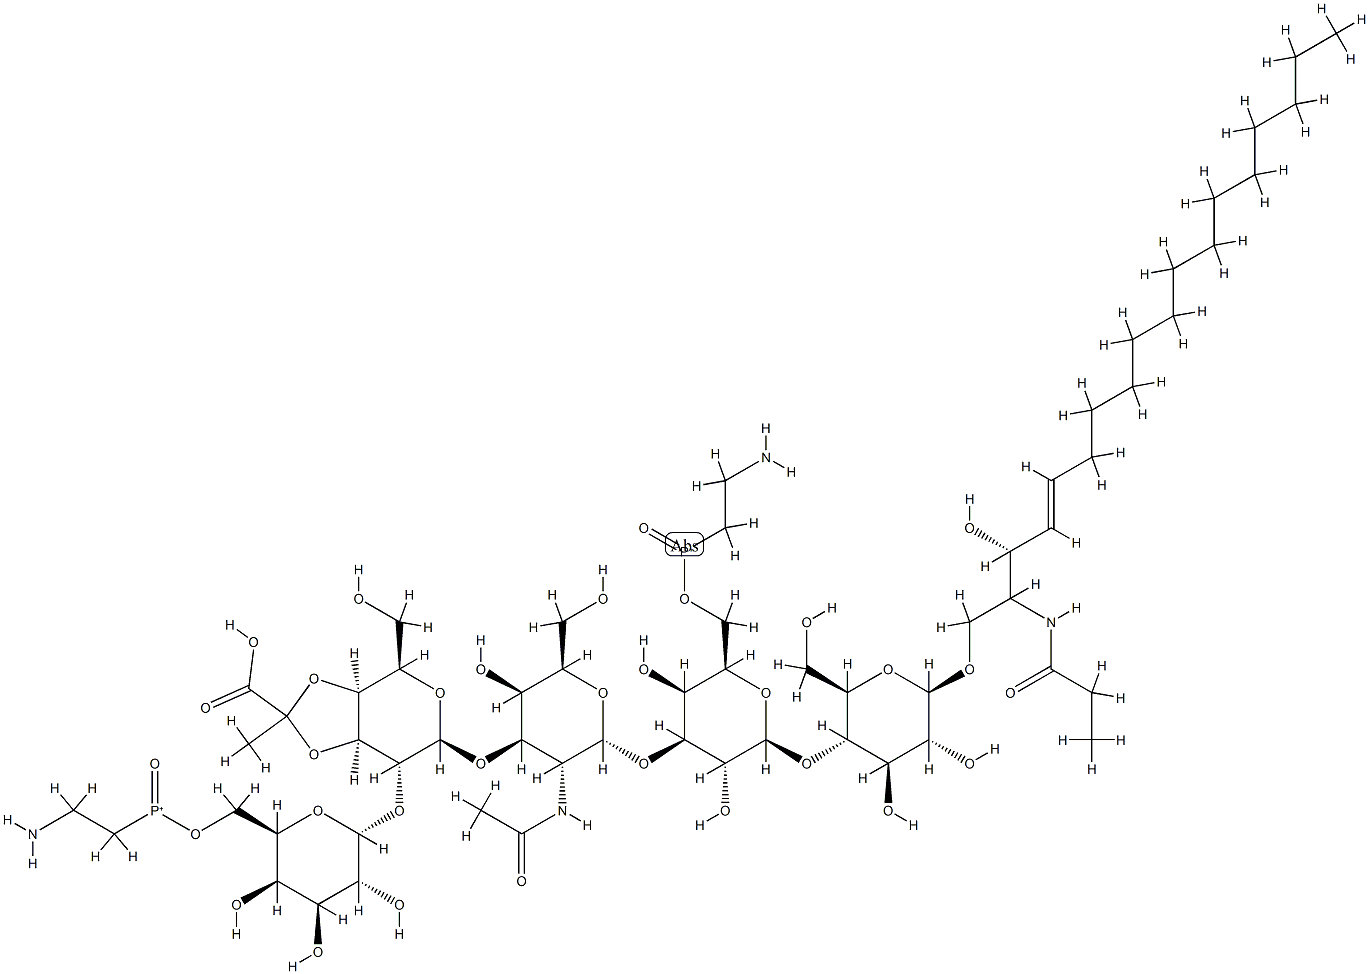 134711-49-2 F-9 glycosphingolipid